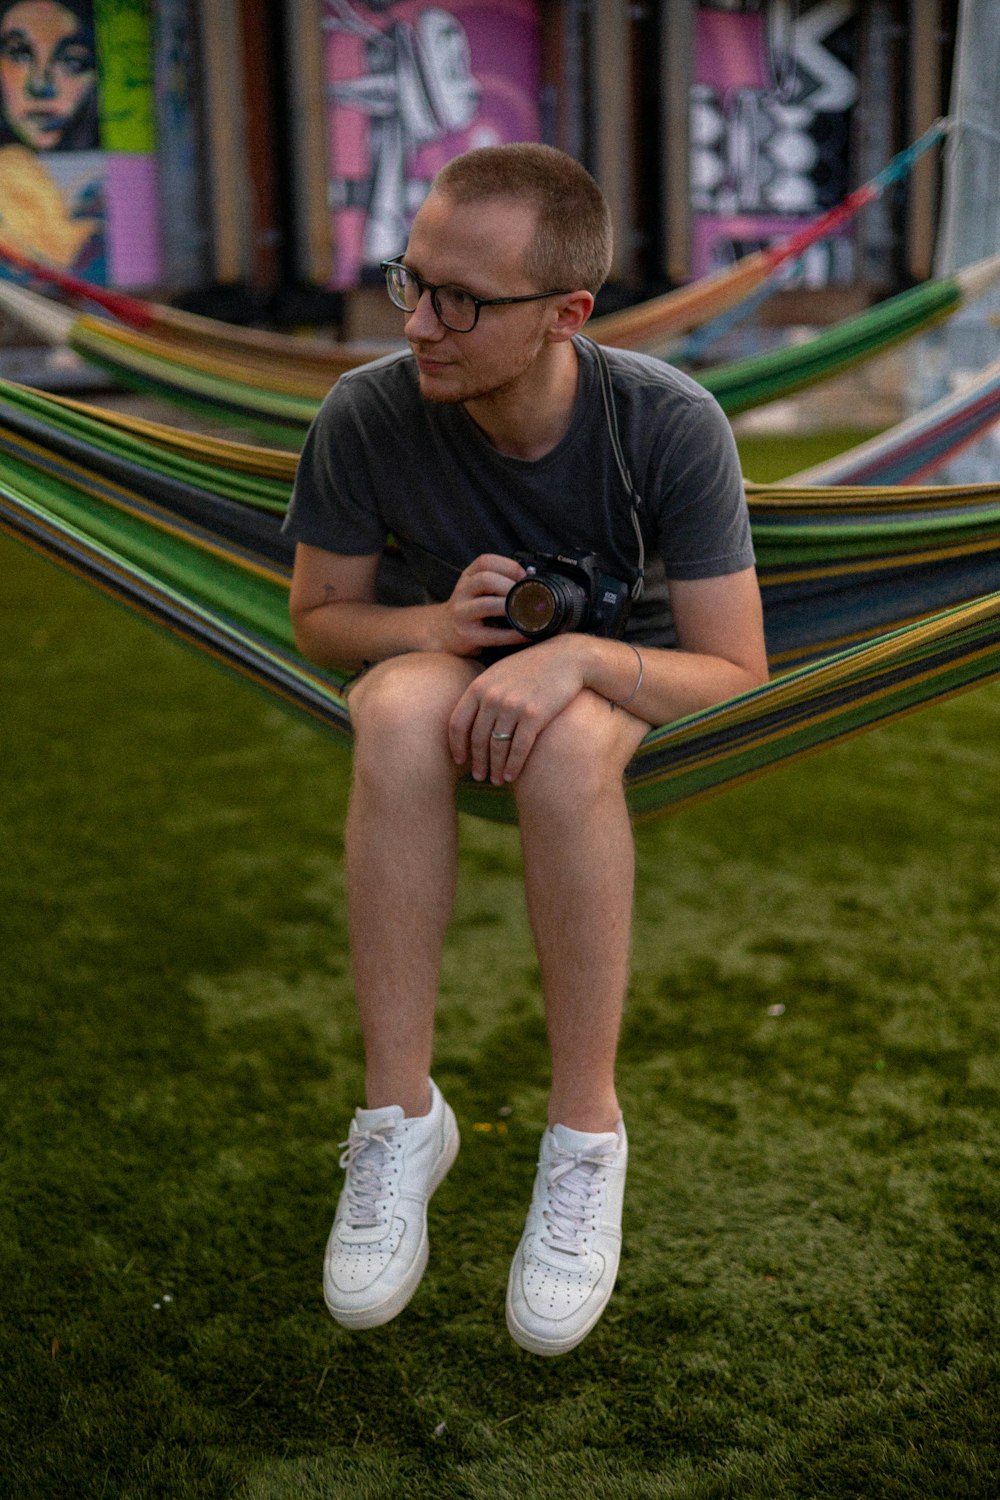 a man sitting in a hammock with a camera